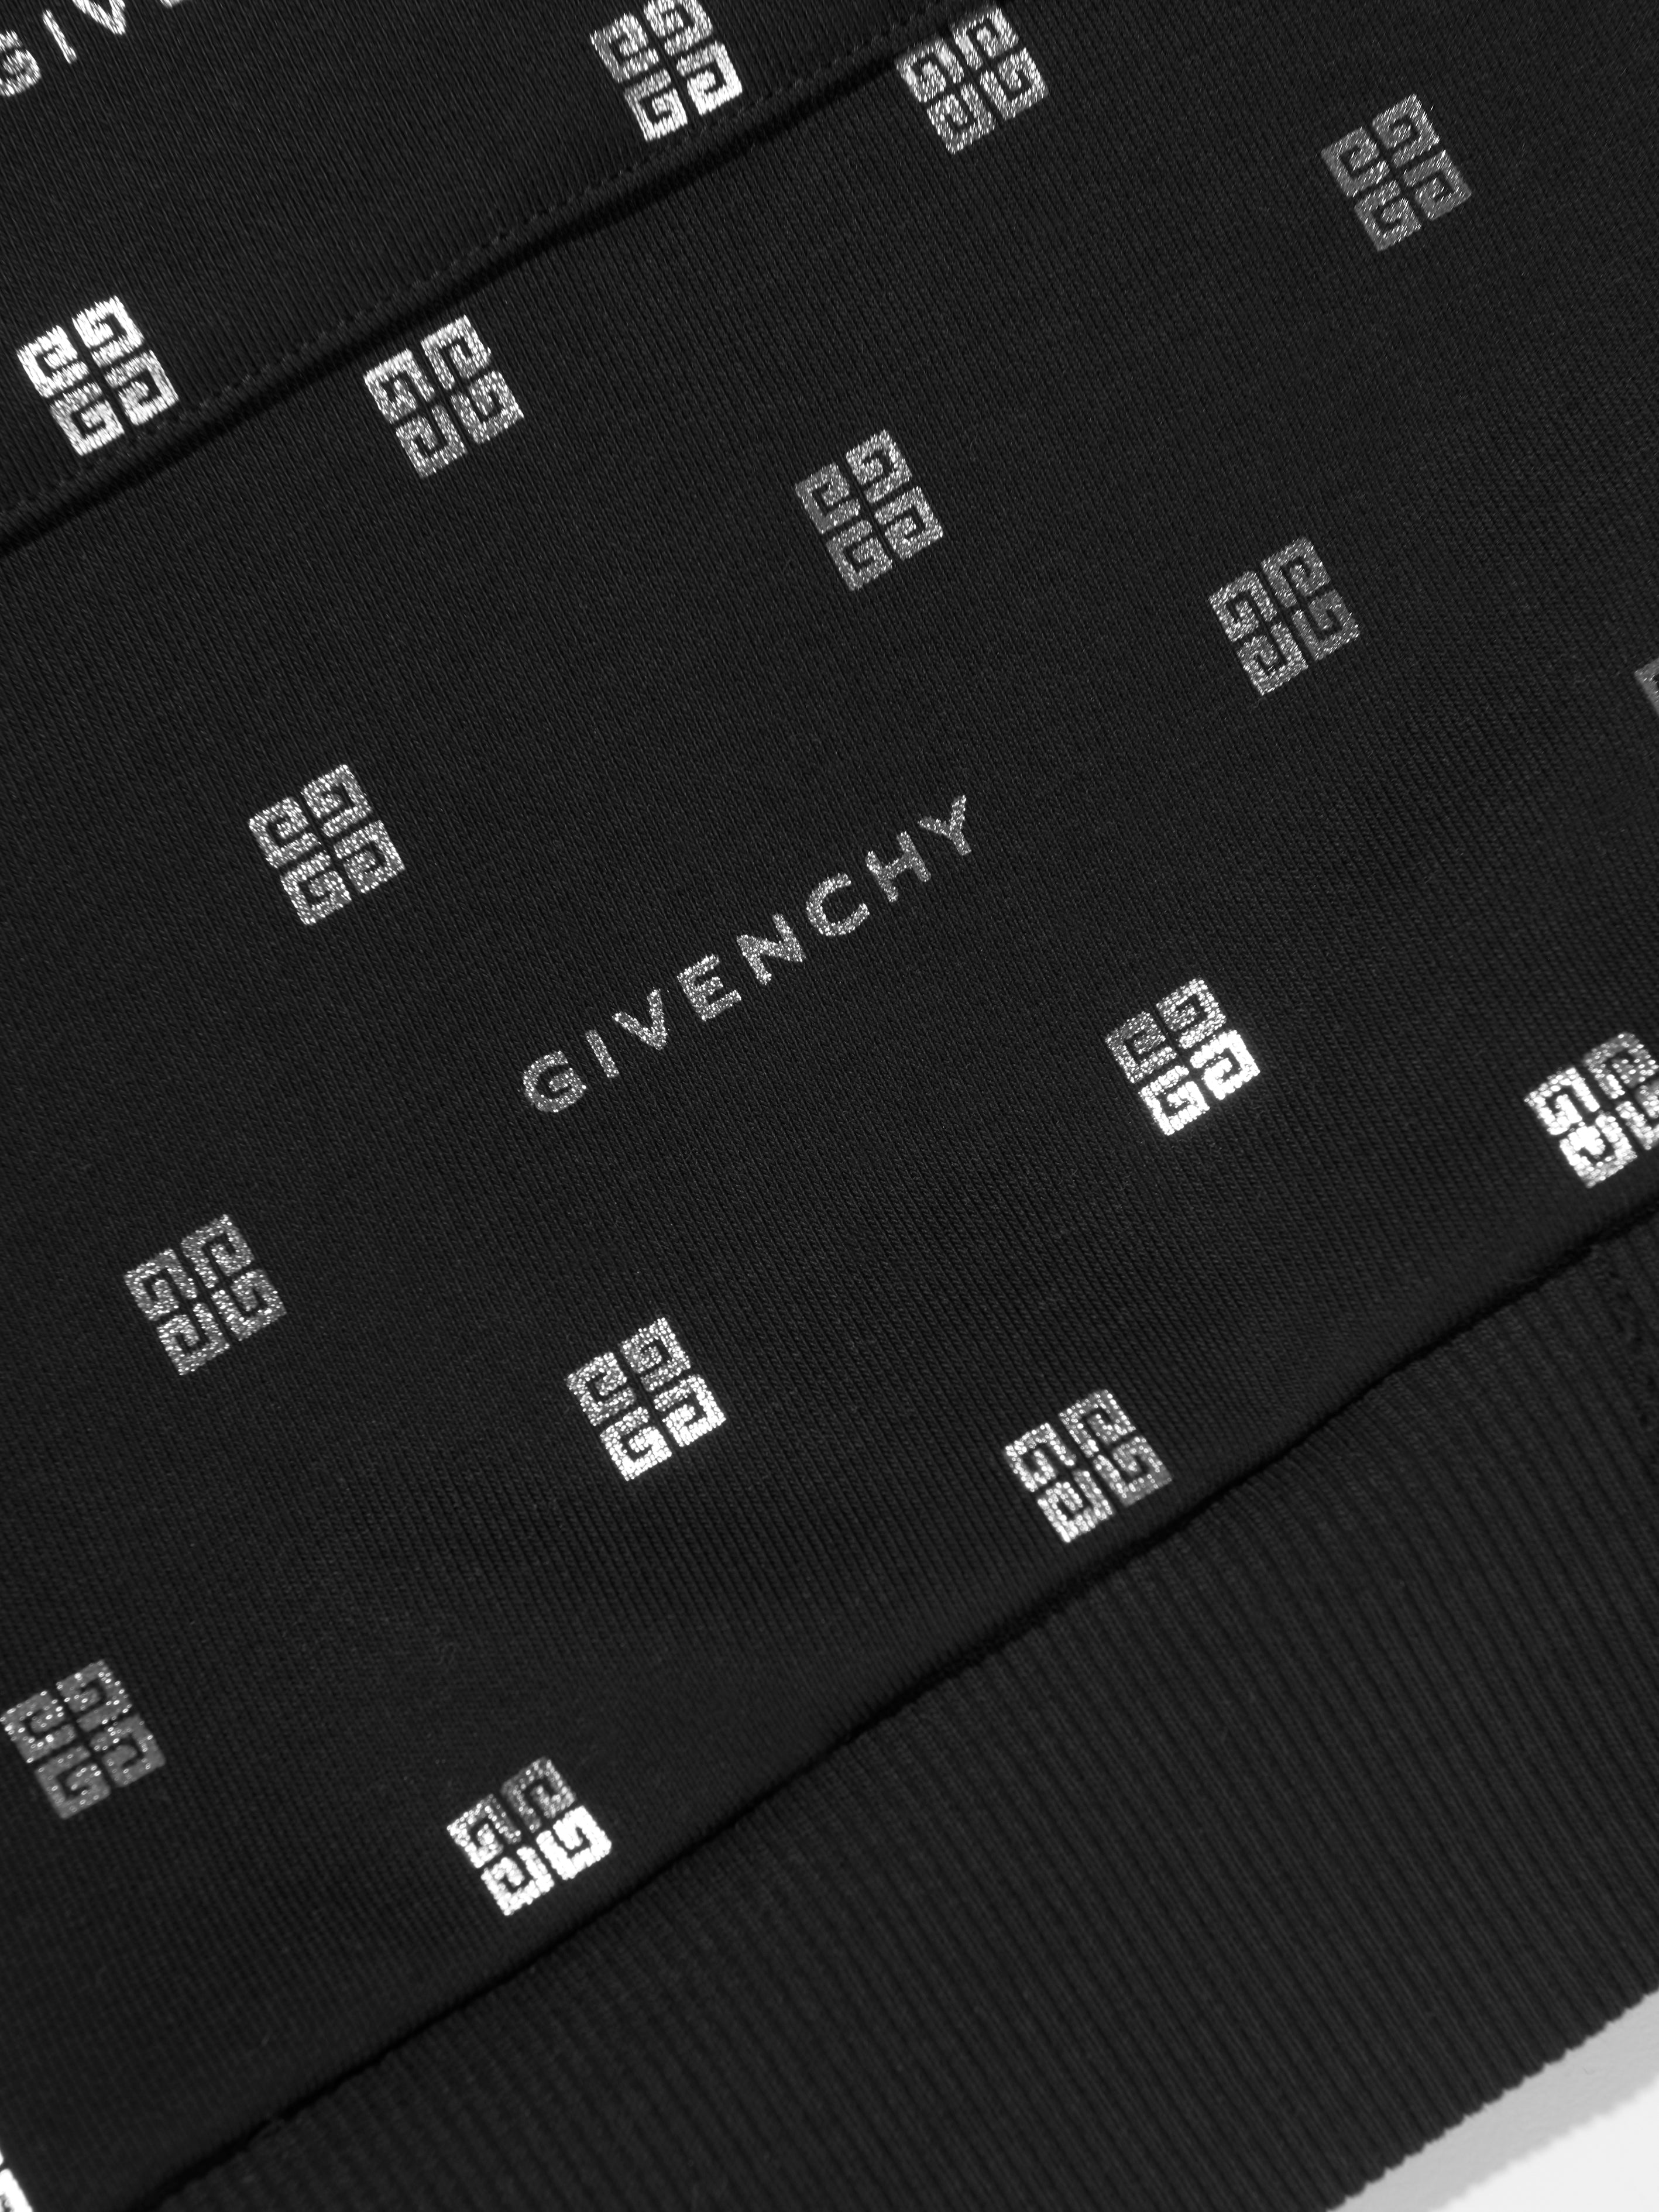 Givenchy - Girls Black 4G Logo Dress